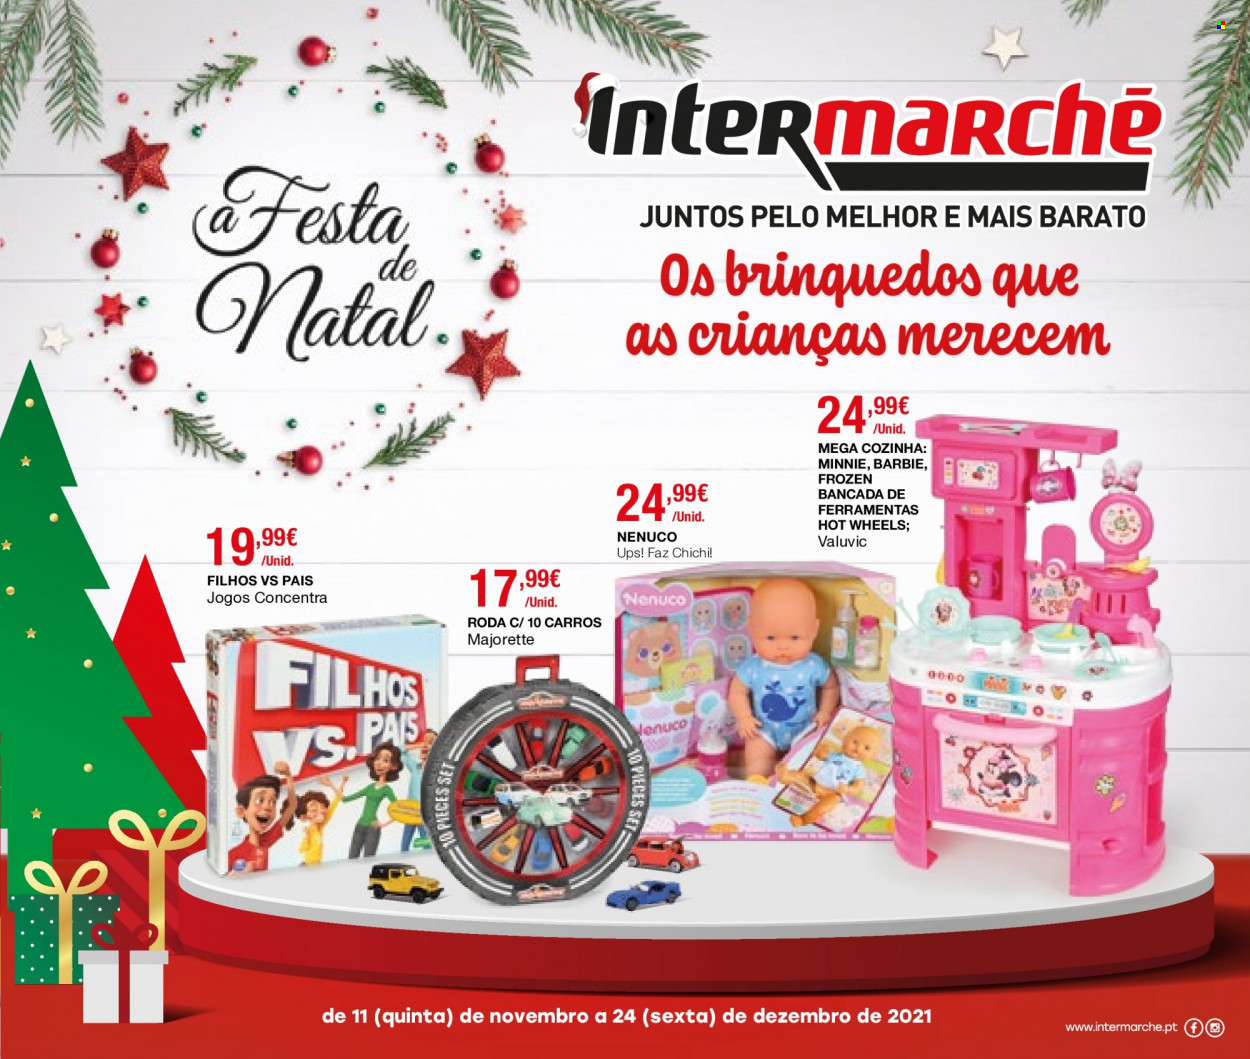 thumbnail - Folheto Intermarché - 11.11.2021 - 24.12.2021 - Produtos em promoção - Frozen, Minnie, Barbie, Hot Wheels. Página 1.